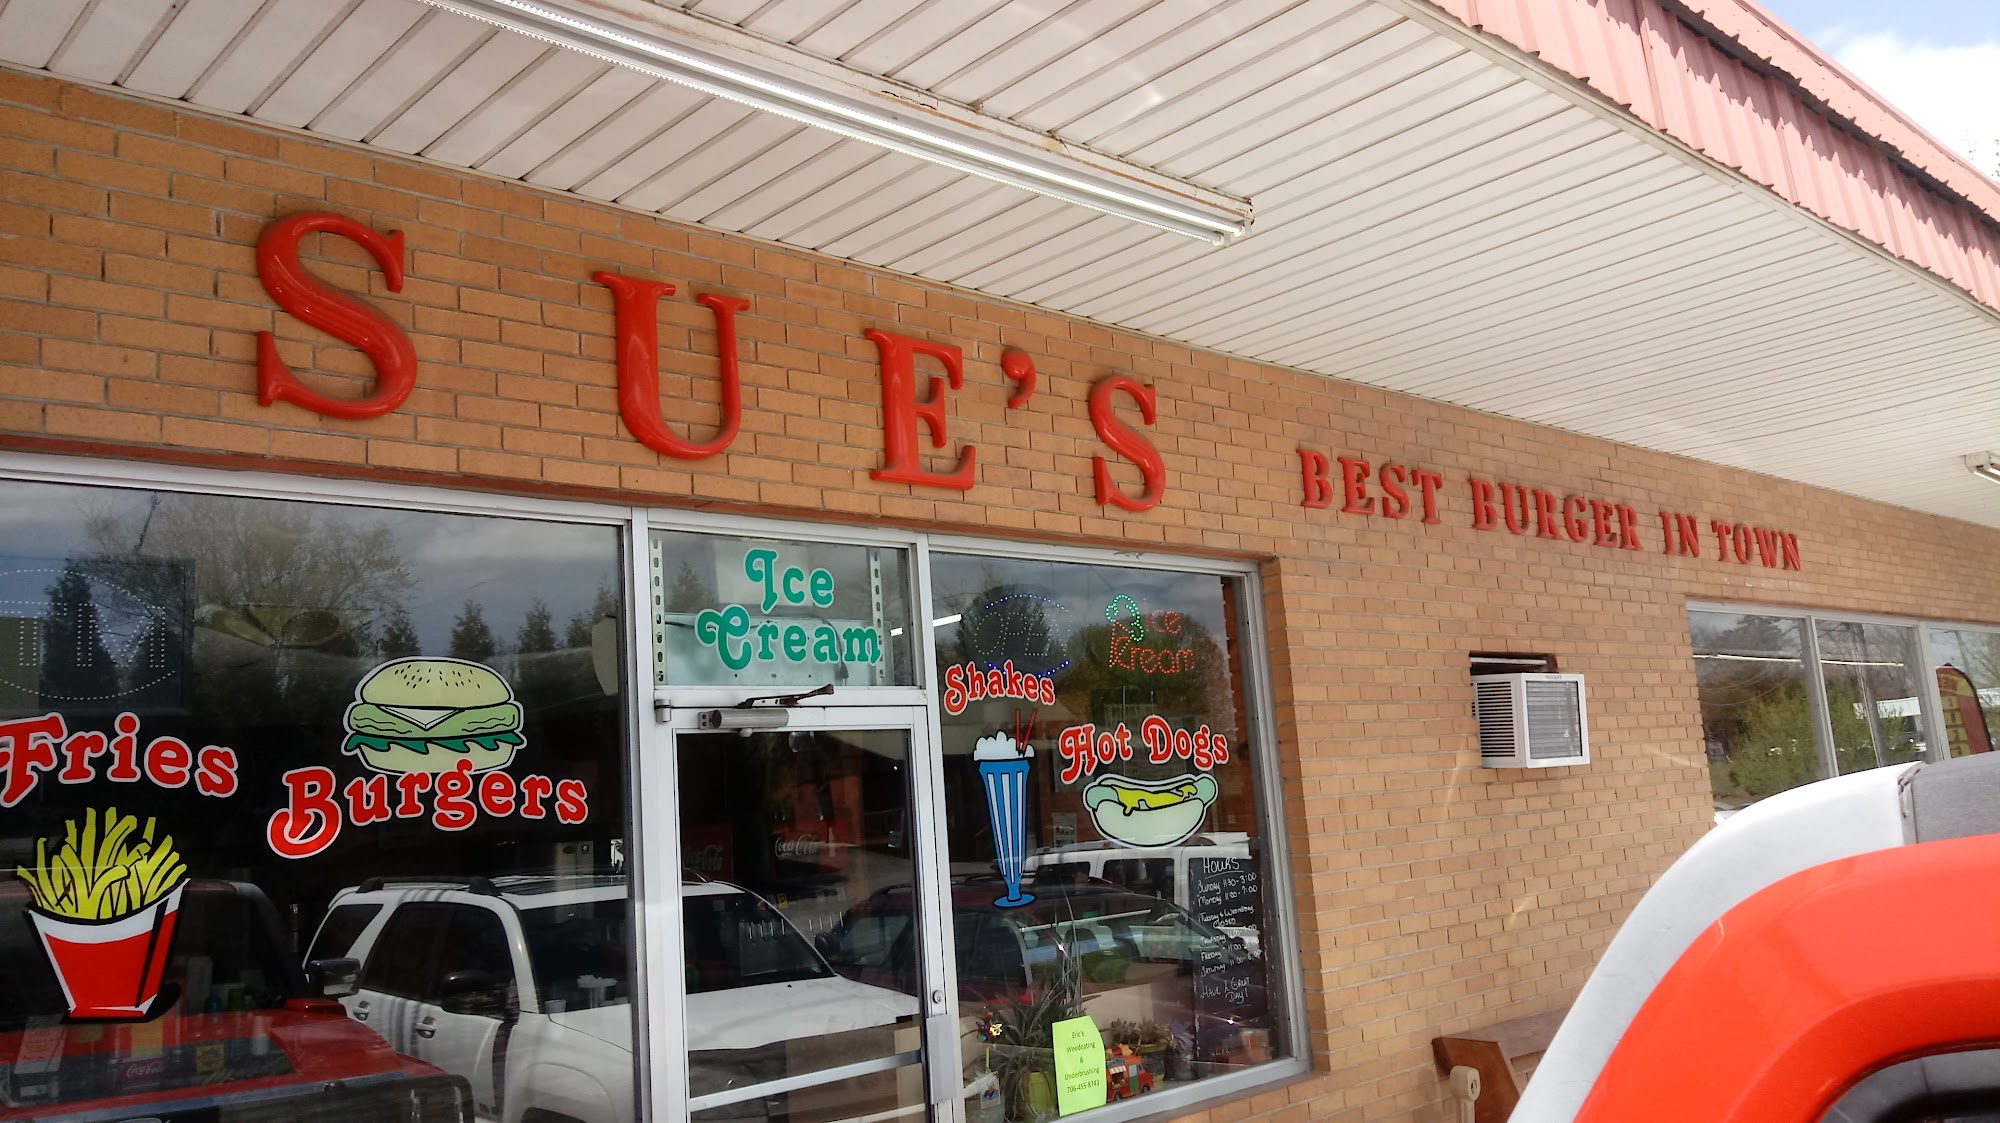 Sue's Burgers